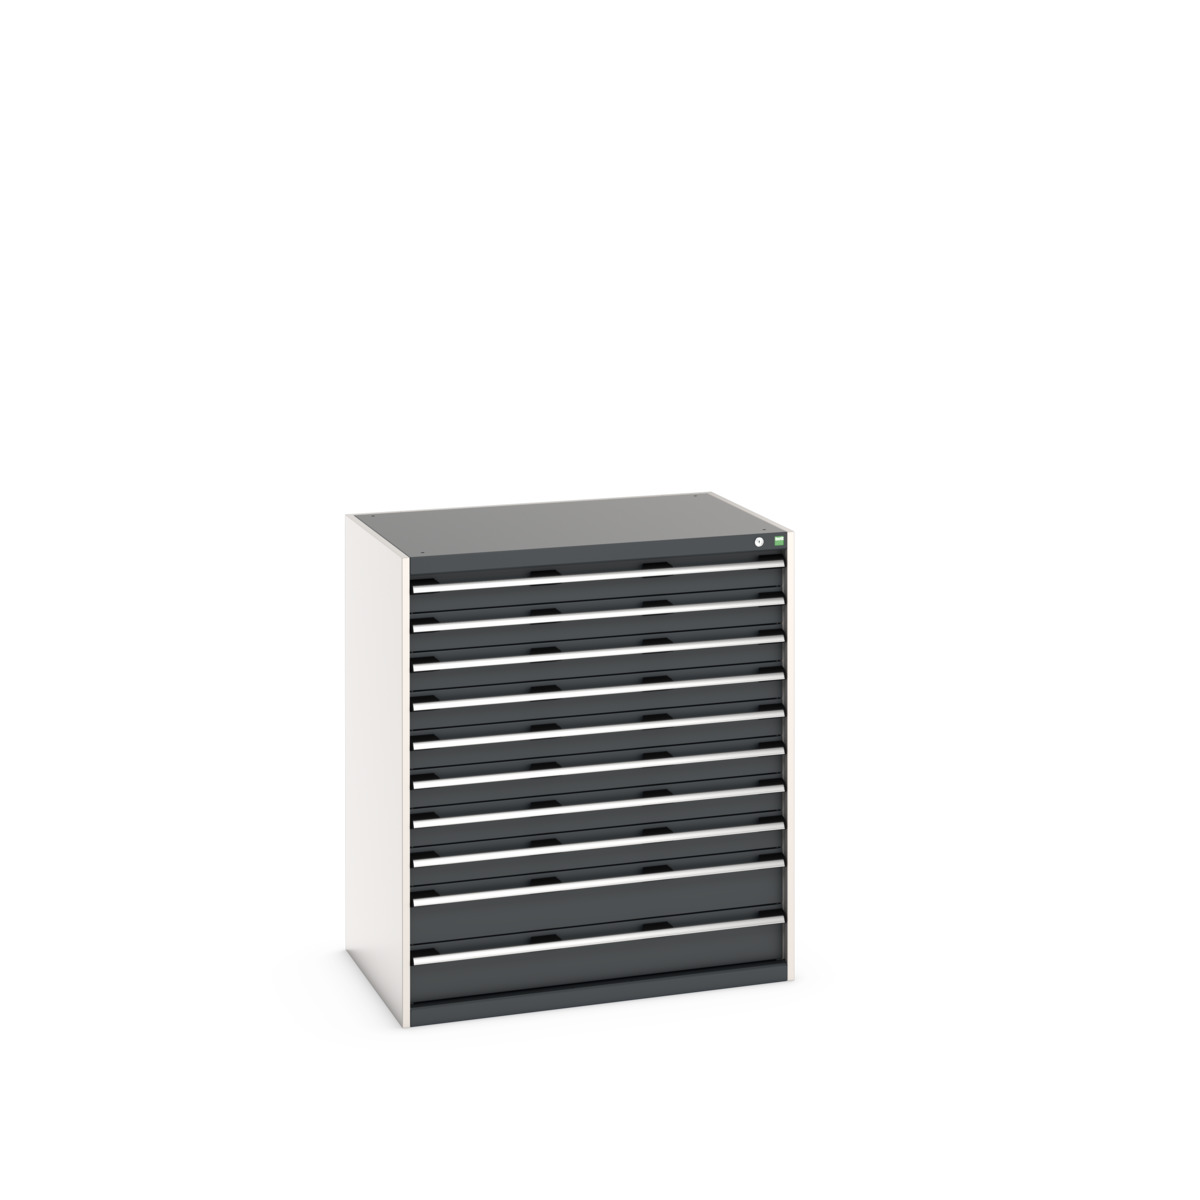 40029034. - cubio drawer cabinet